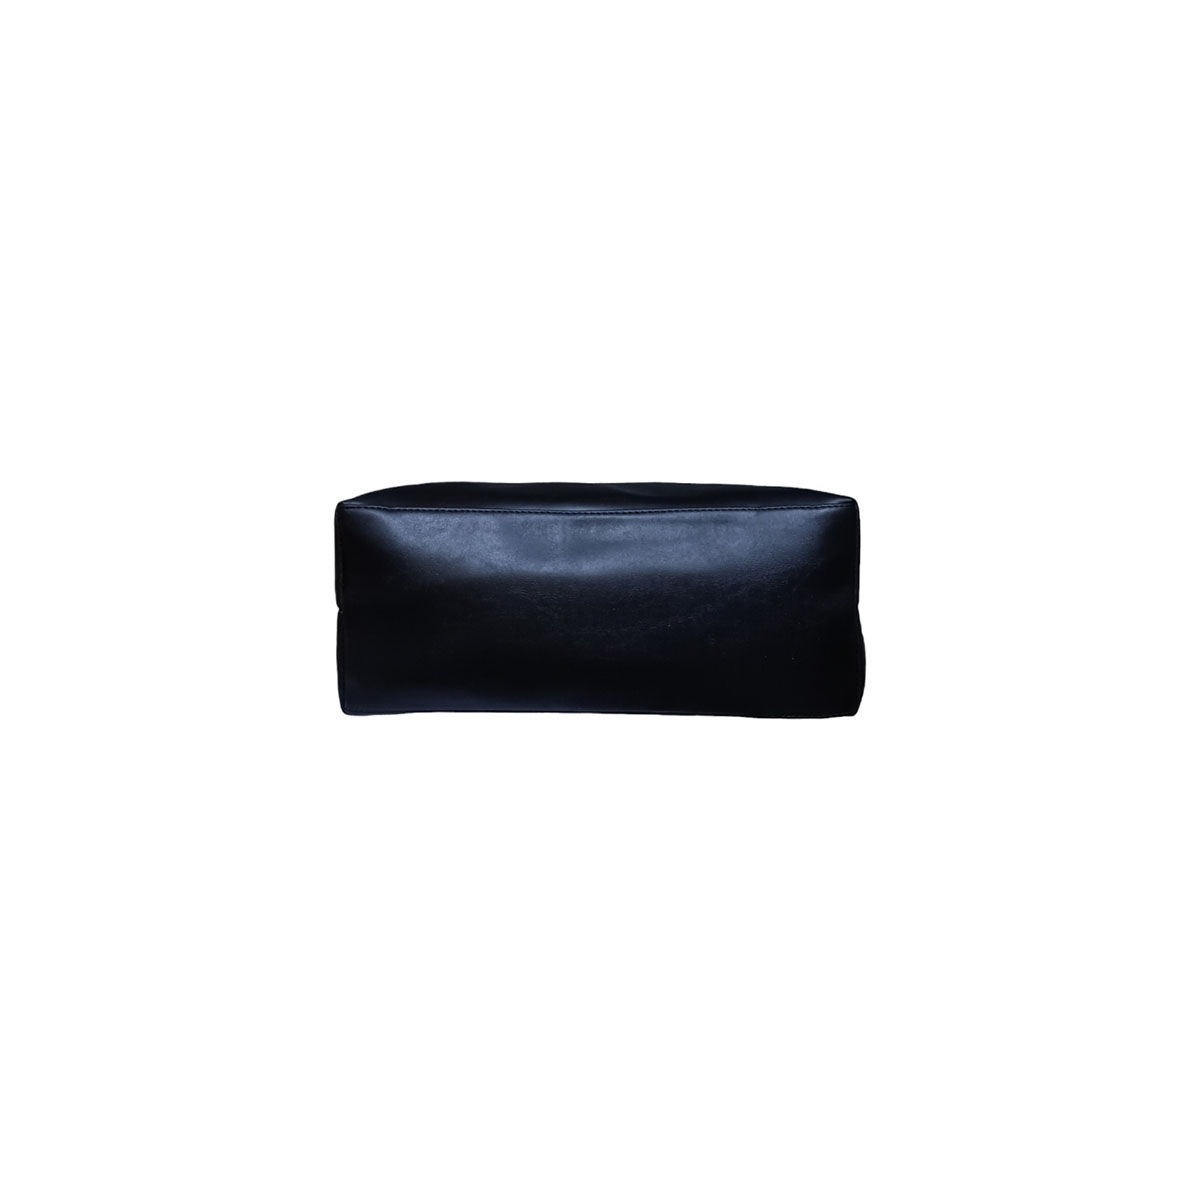 Buy LAVAWA Small Crossbody Bags for Women Crossbody Handbag Fringe Purse  Tassel Shoulder Bag Turquoise Concho Wallet, Small Black at Amazon.in